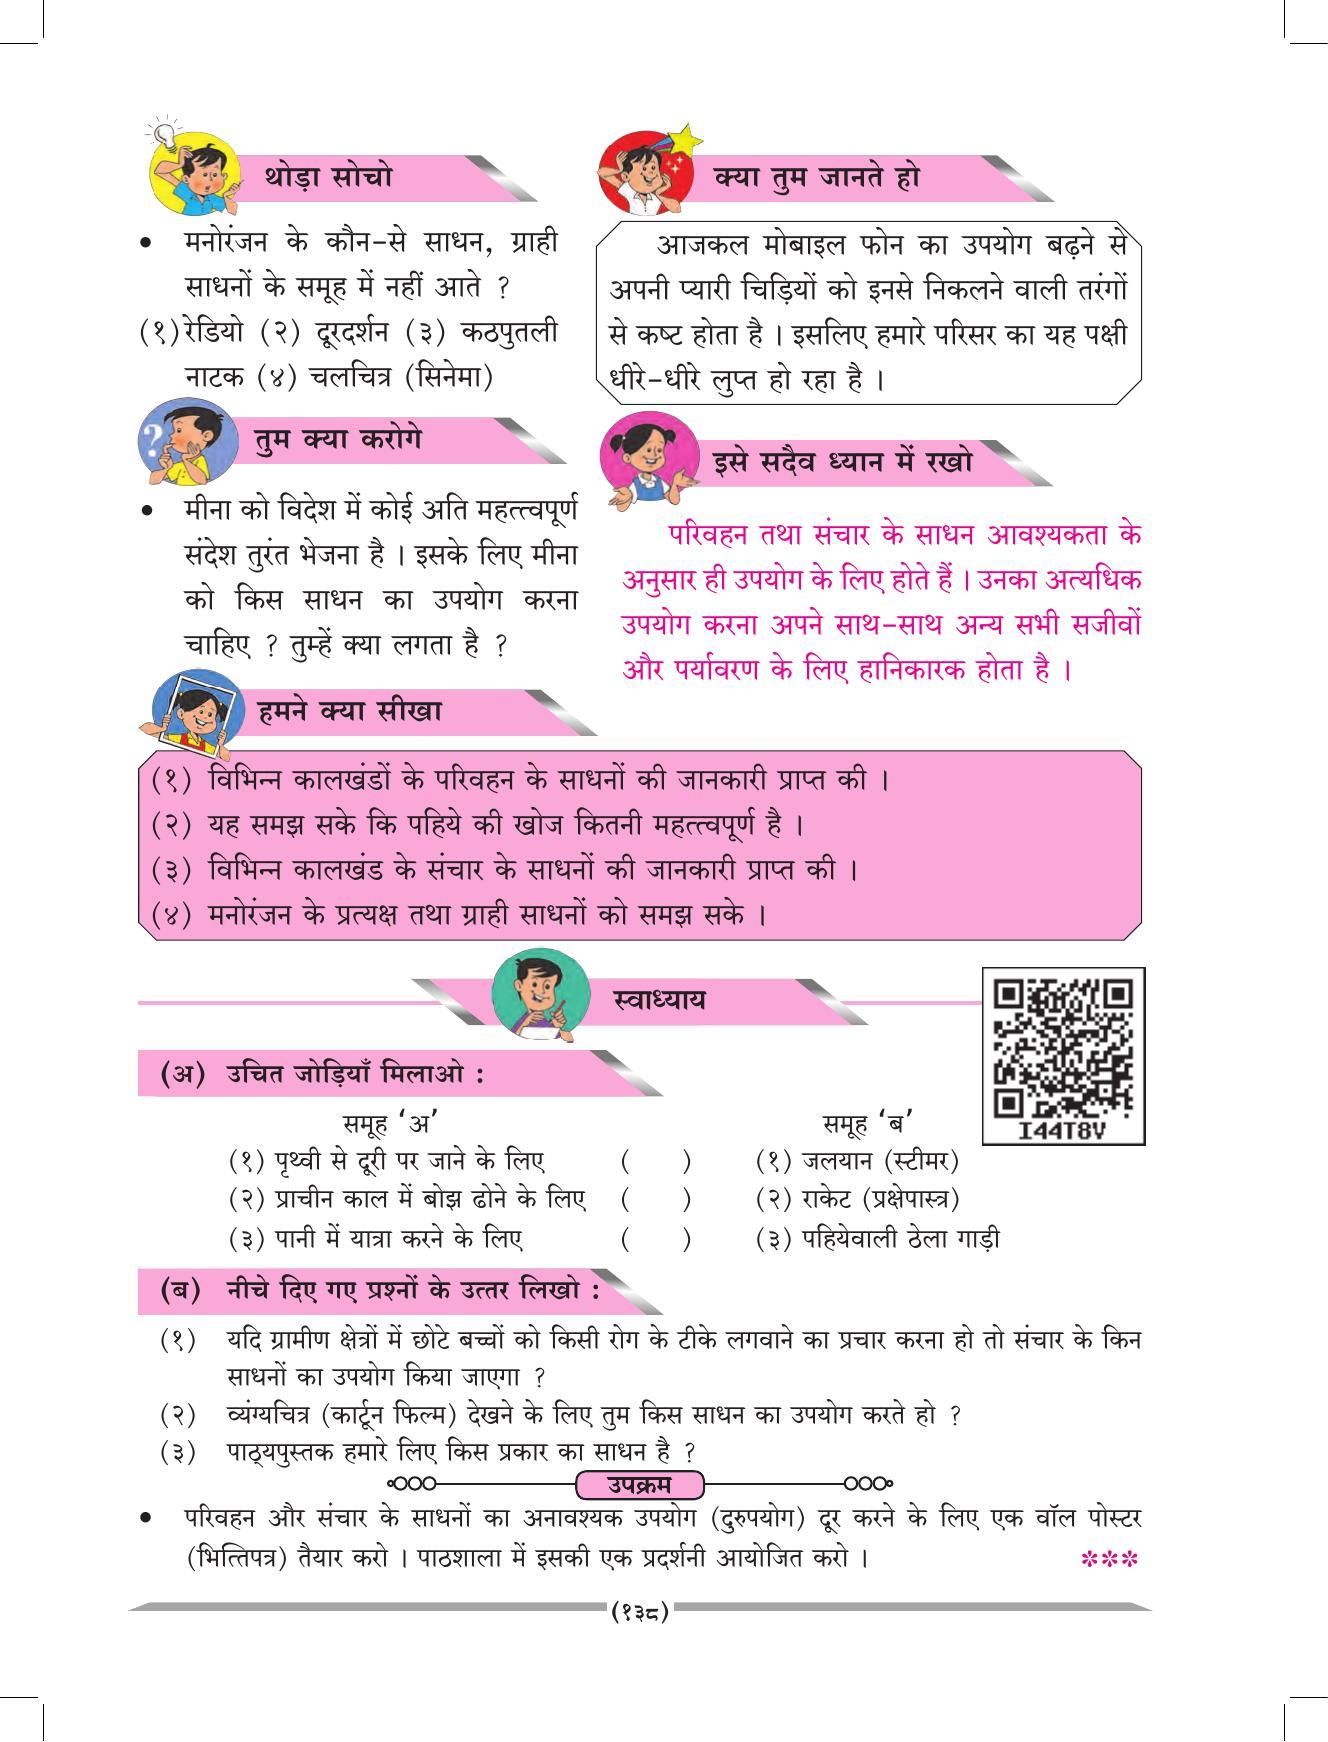 Maharashtra Board Class 4 EVS 1 (Hindi Medium) Textbook - Page 148